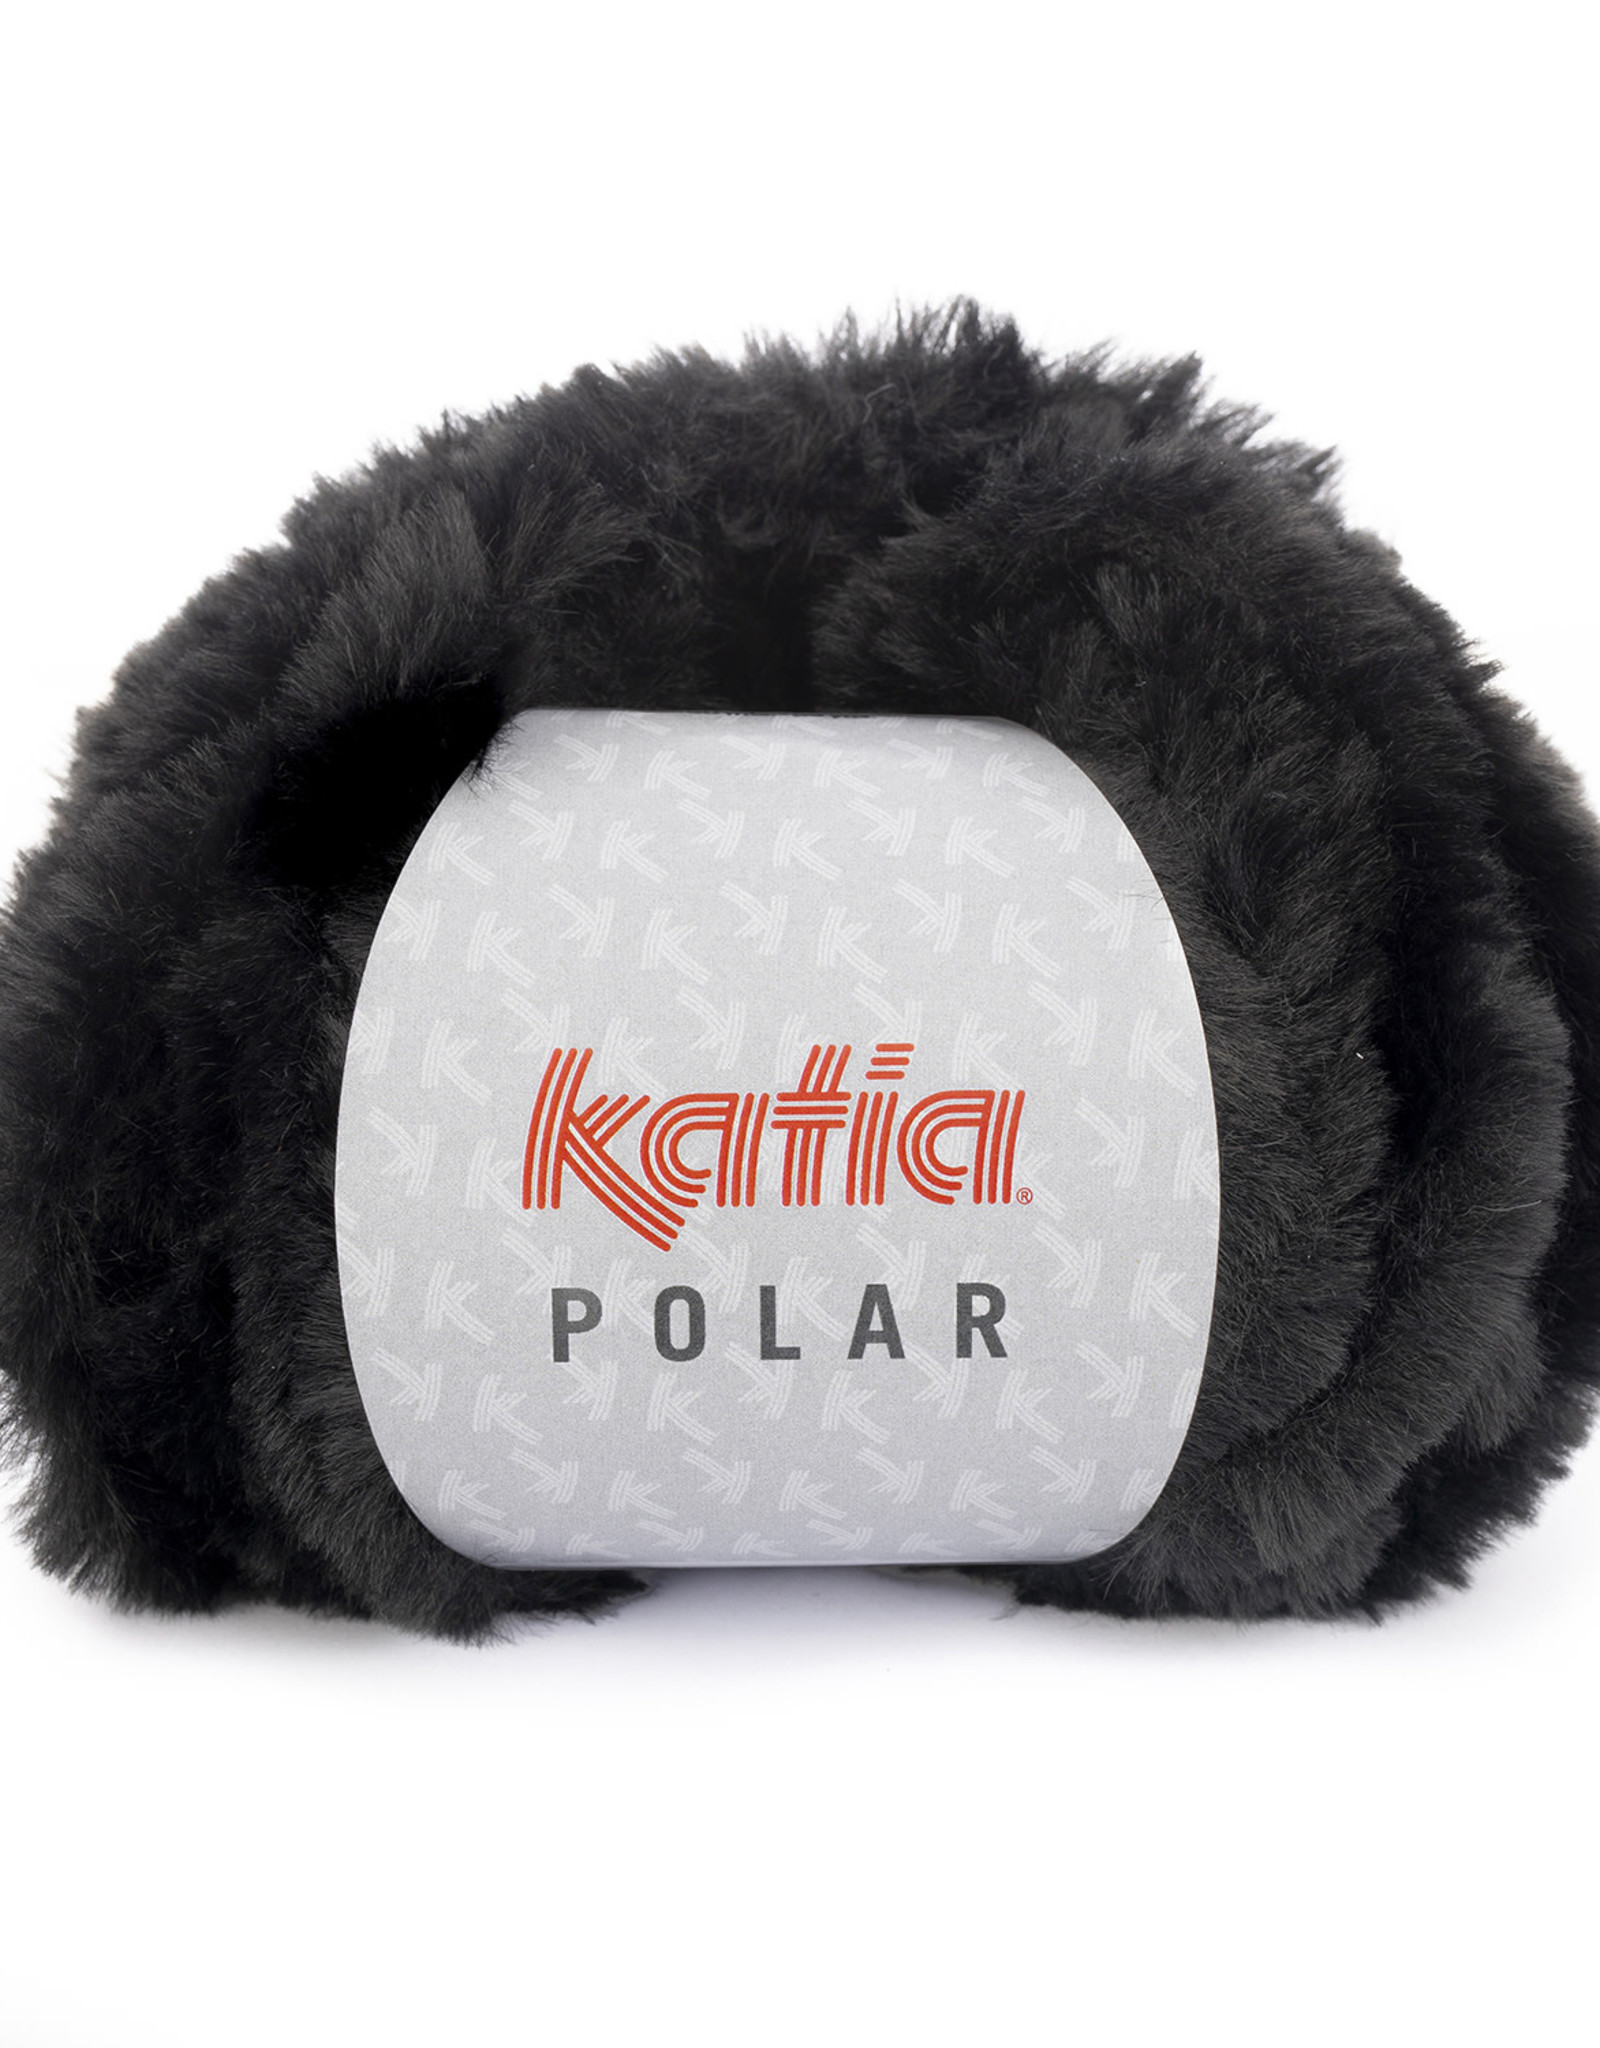 Katia Katia Polar 87 Zwart